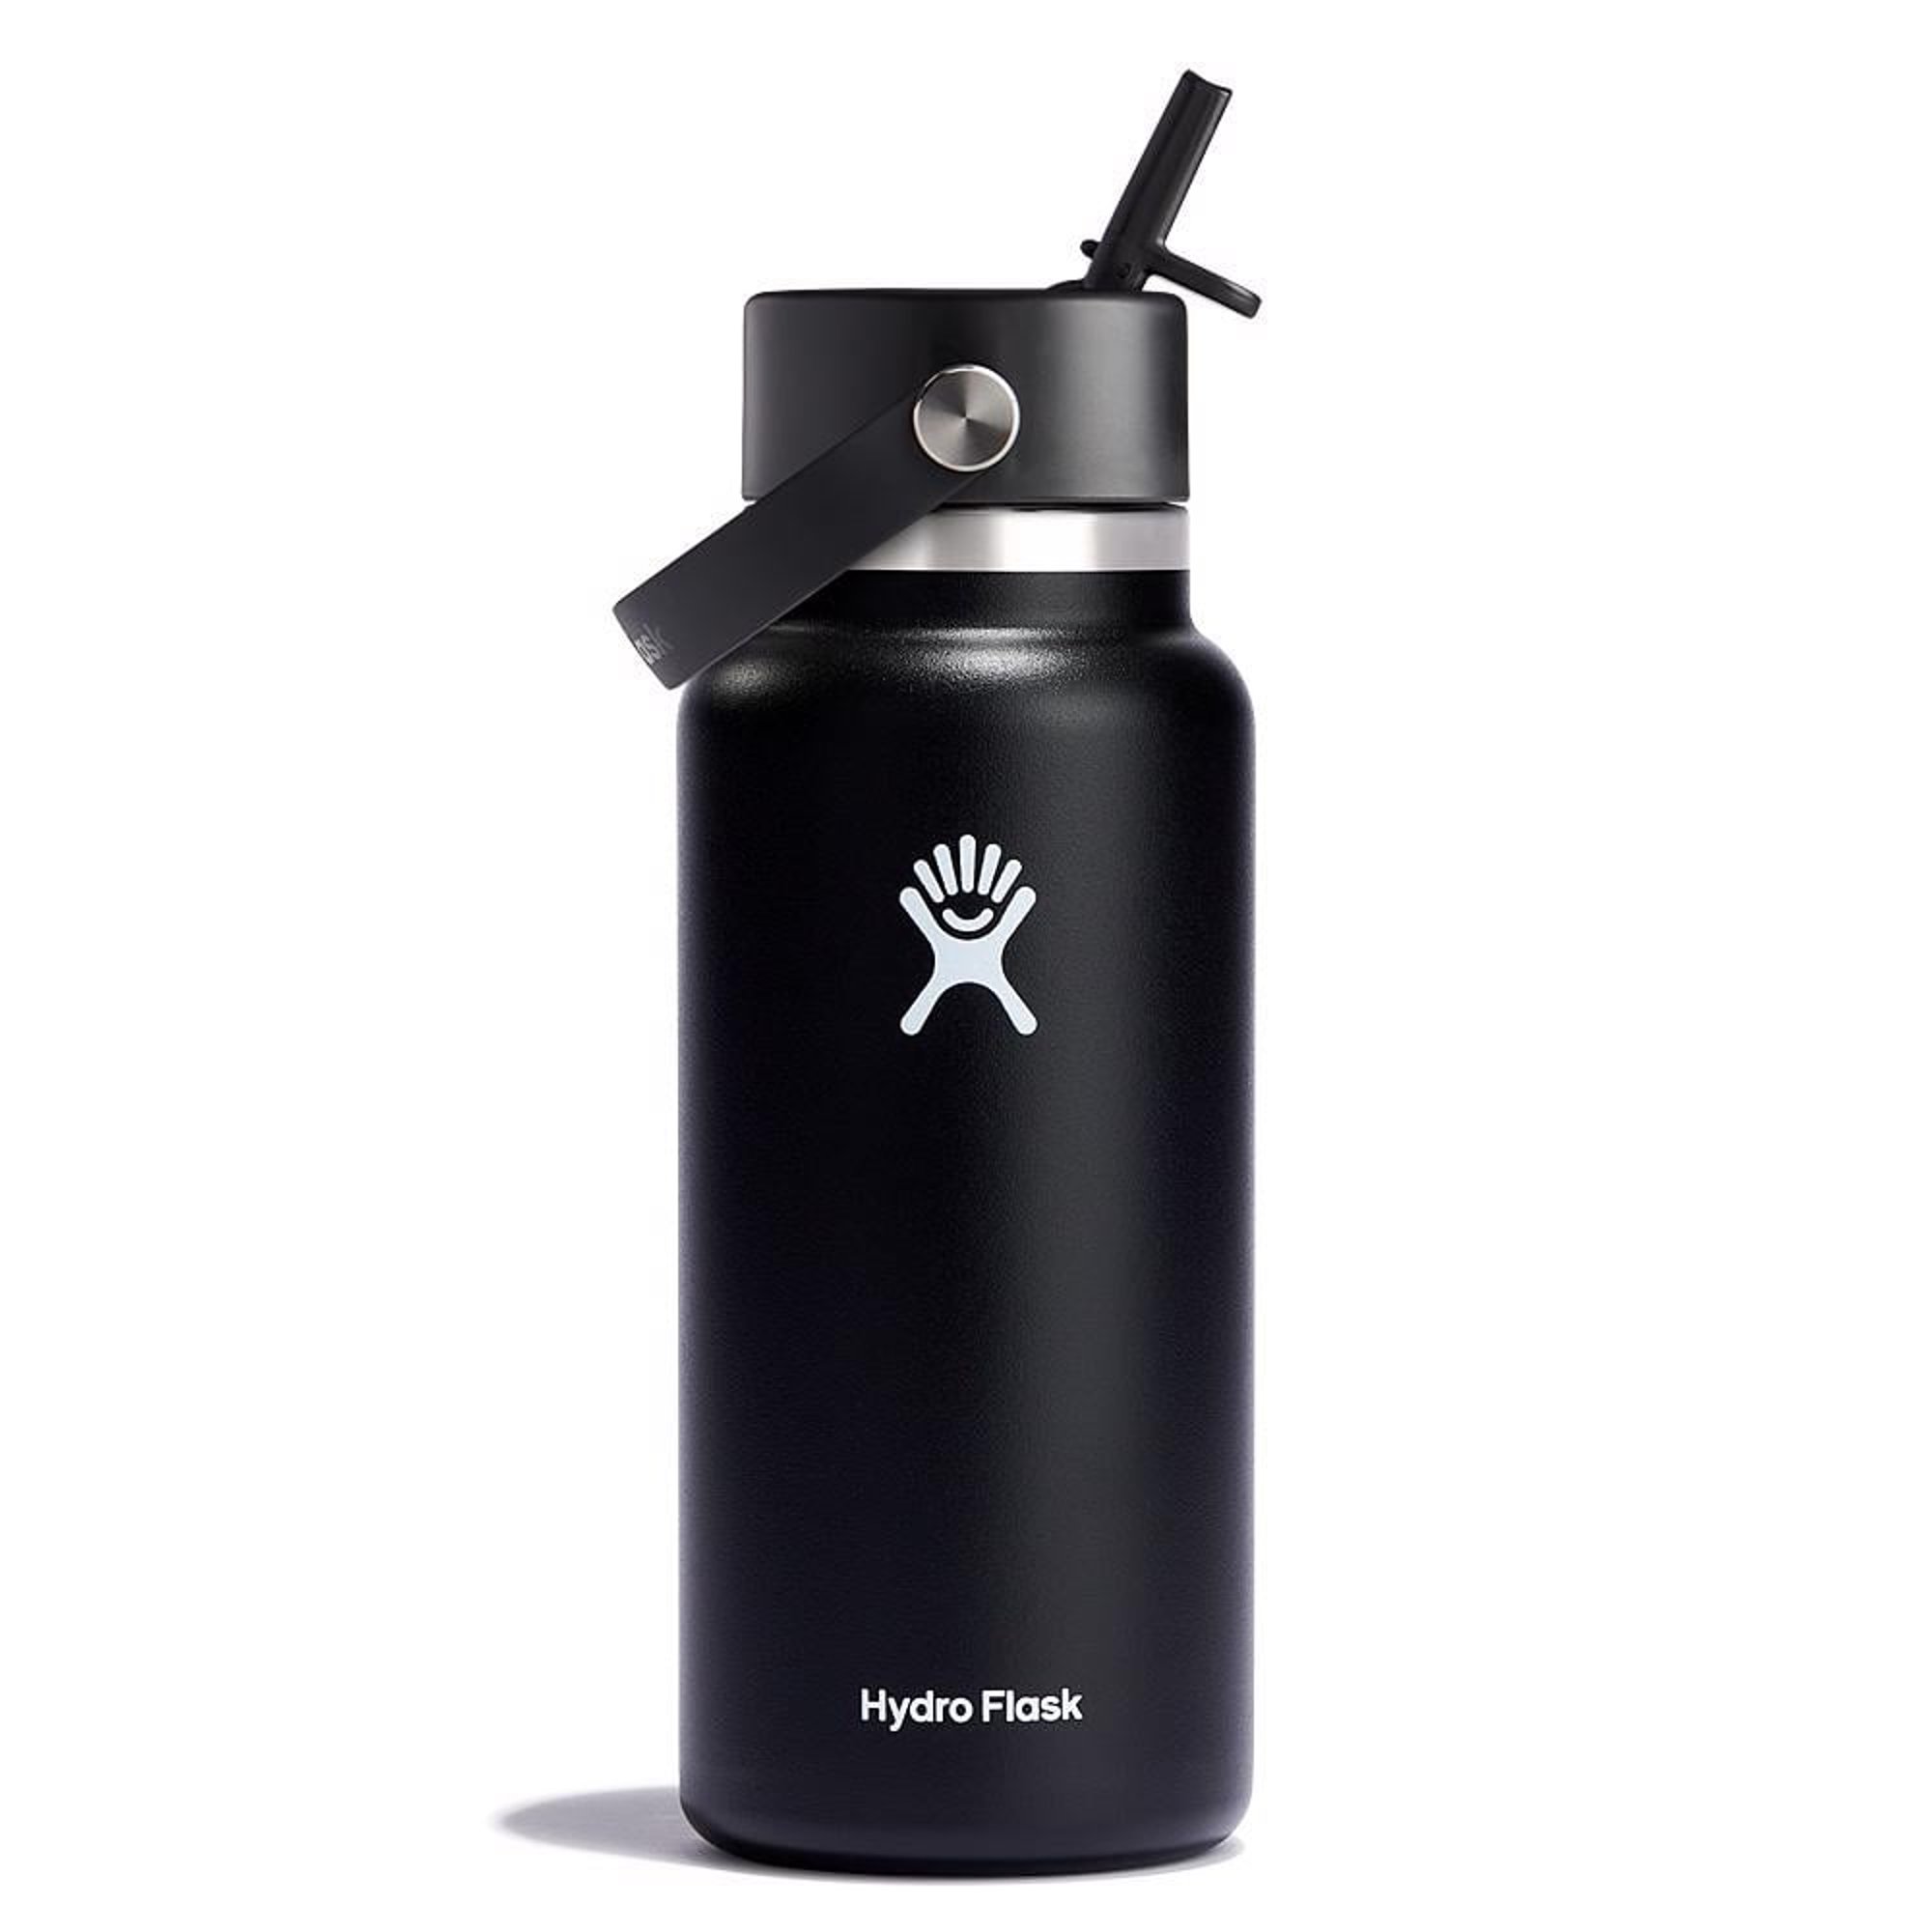 Hydro Flask Black 32 oz Wide Mouth Bottle with Flex Straw Cap